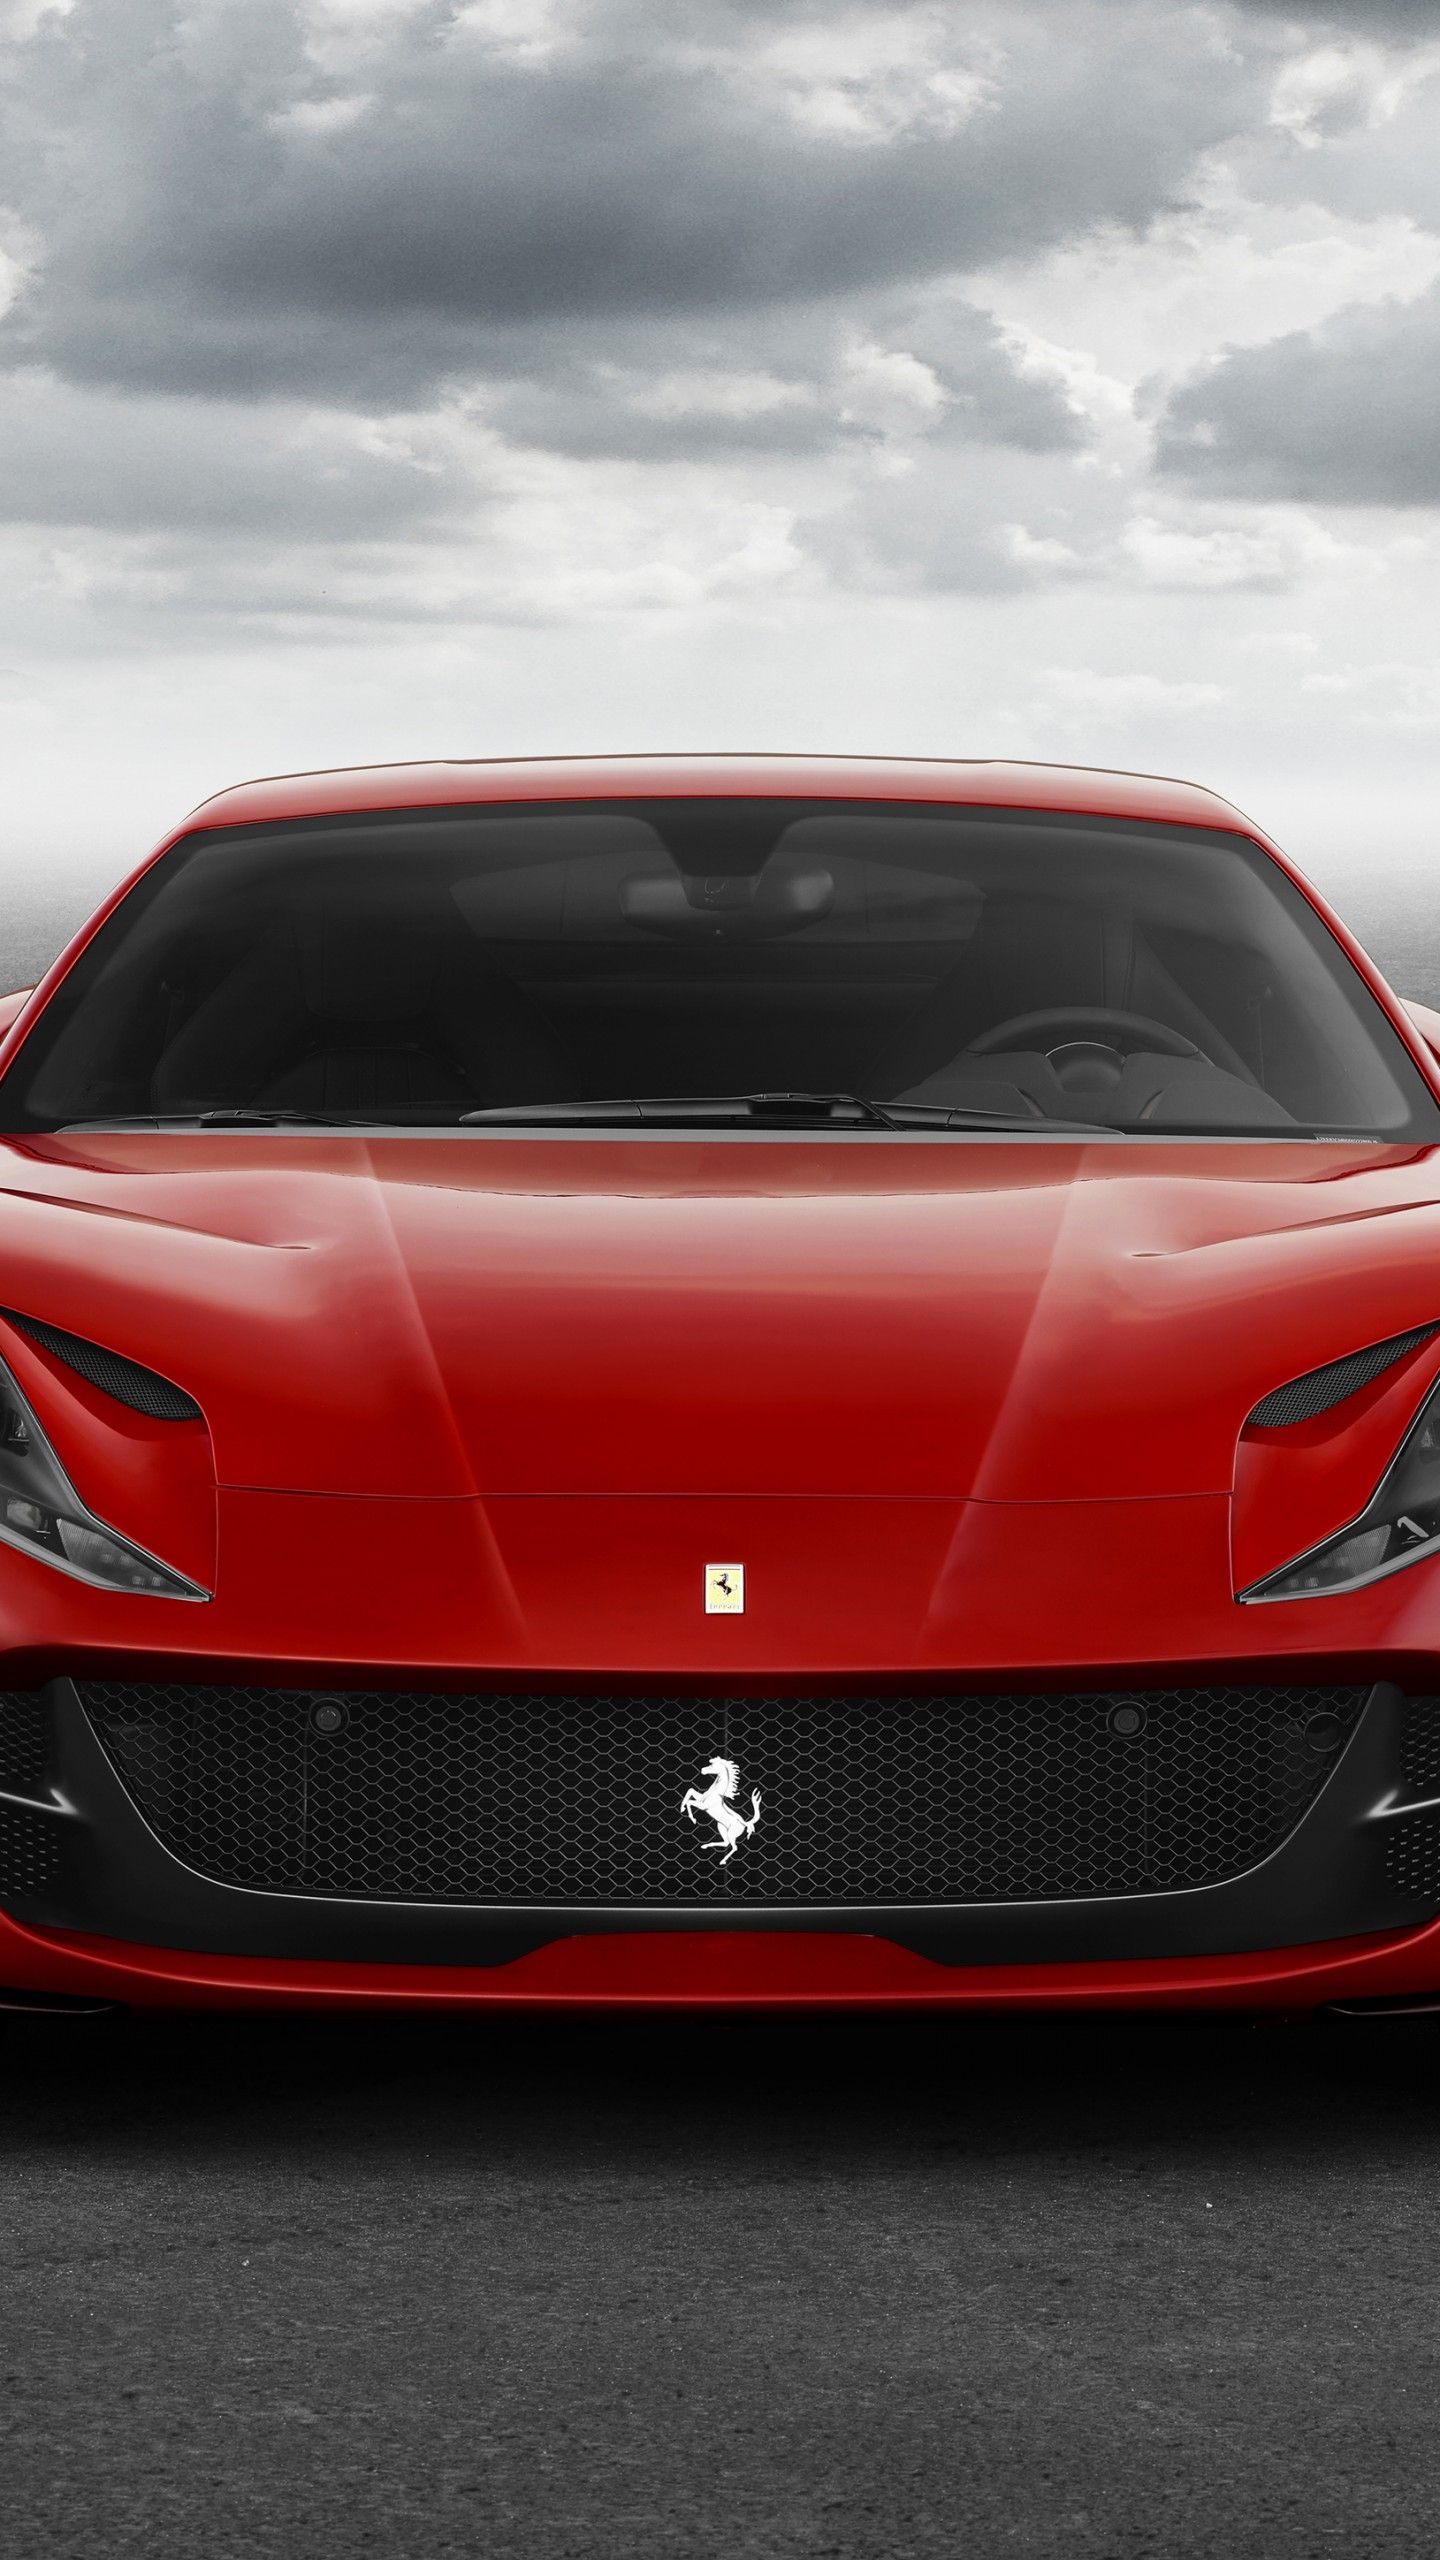 Ferrari Portofino iPhone Wallpaper .com